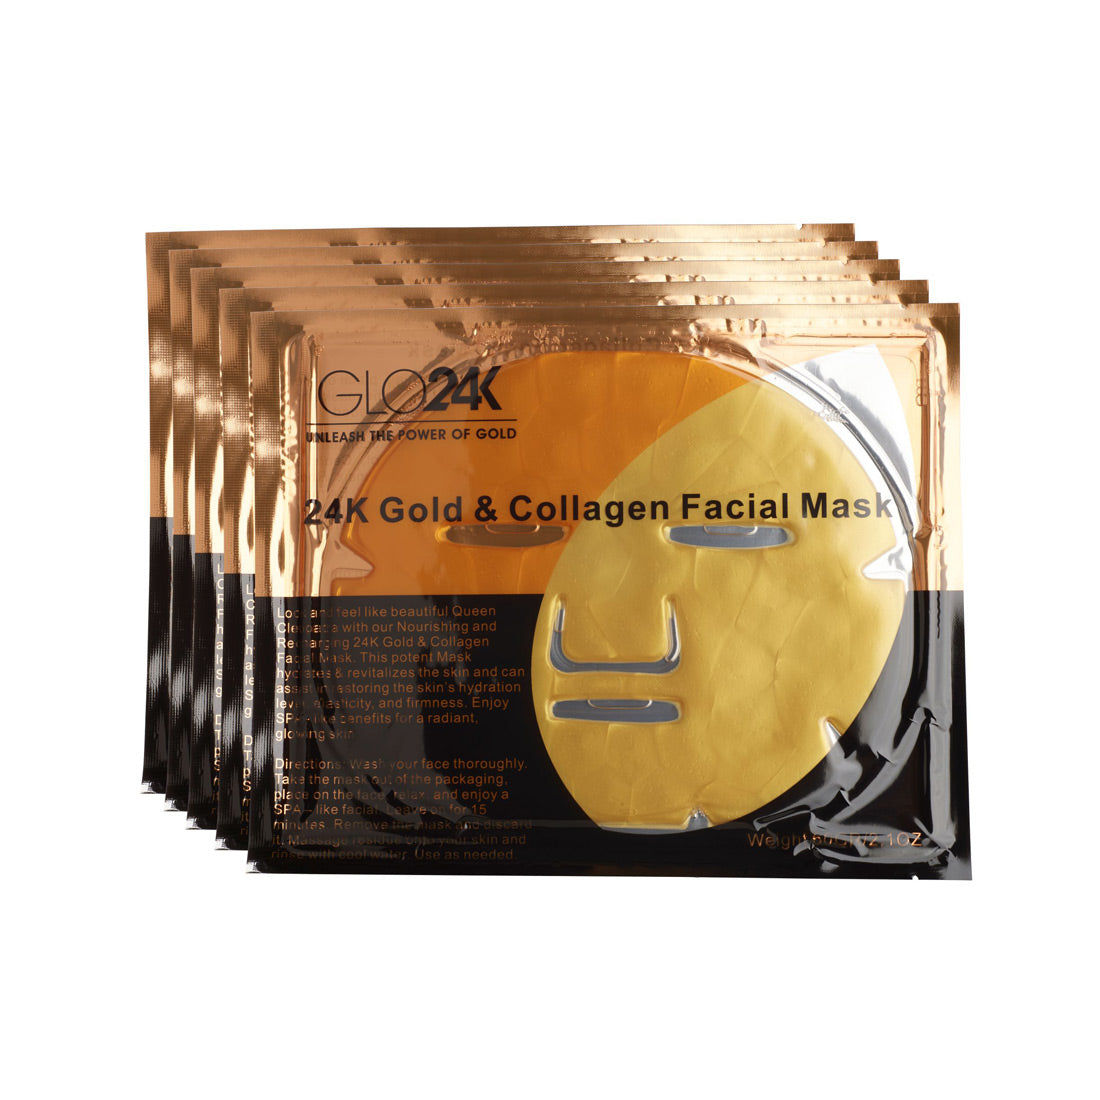 24K Gold & Collagen Facial Mask (Pack of 5)